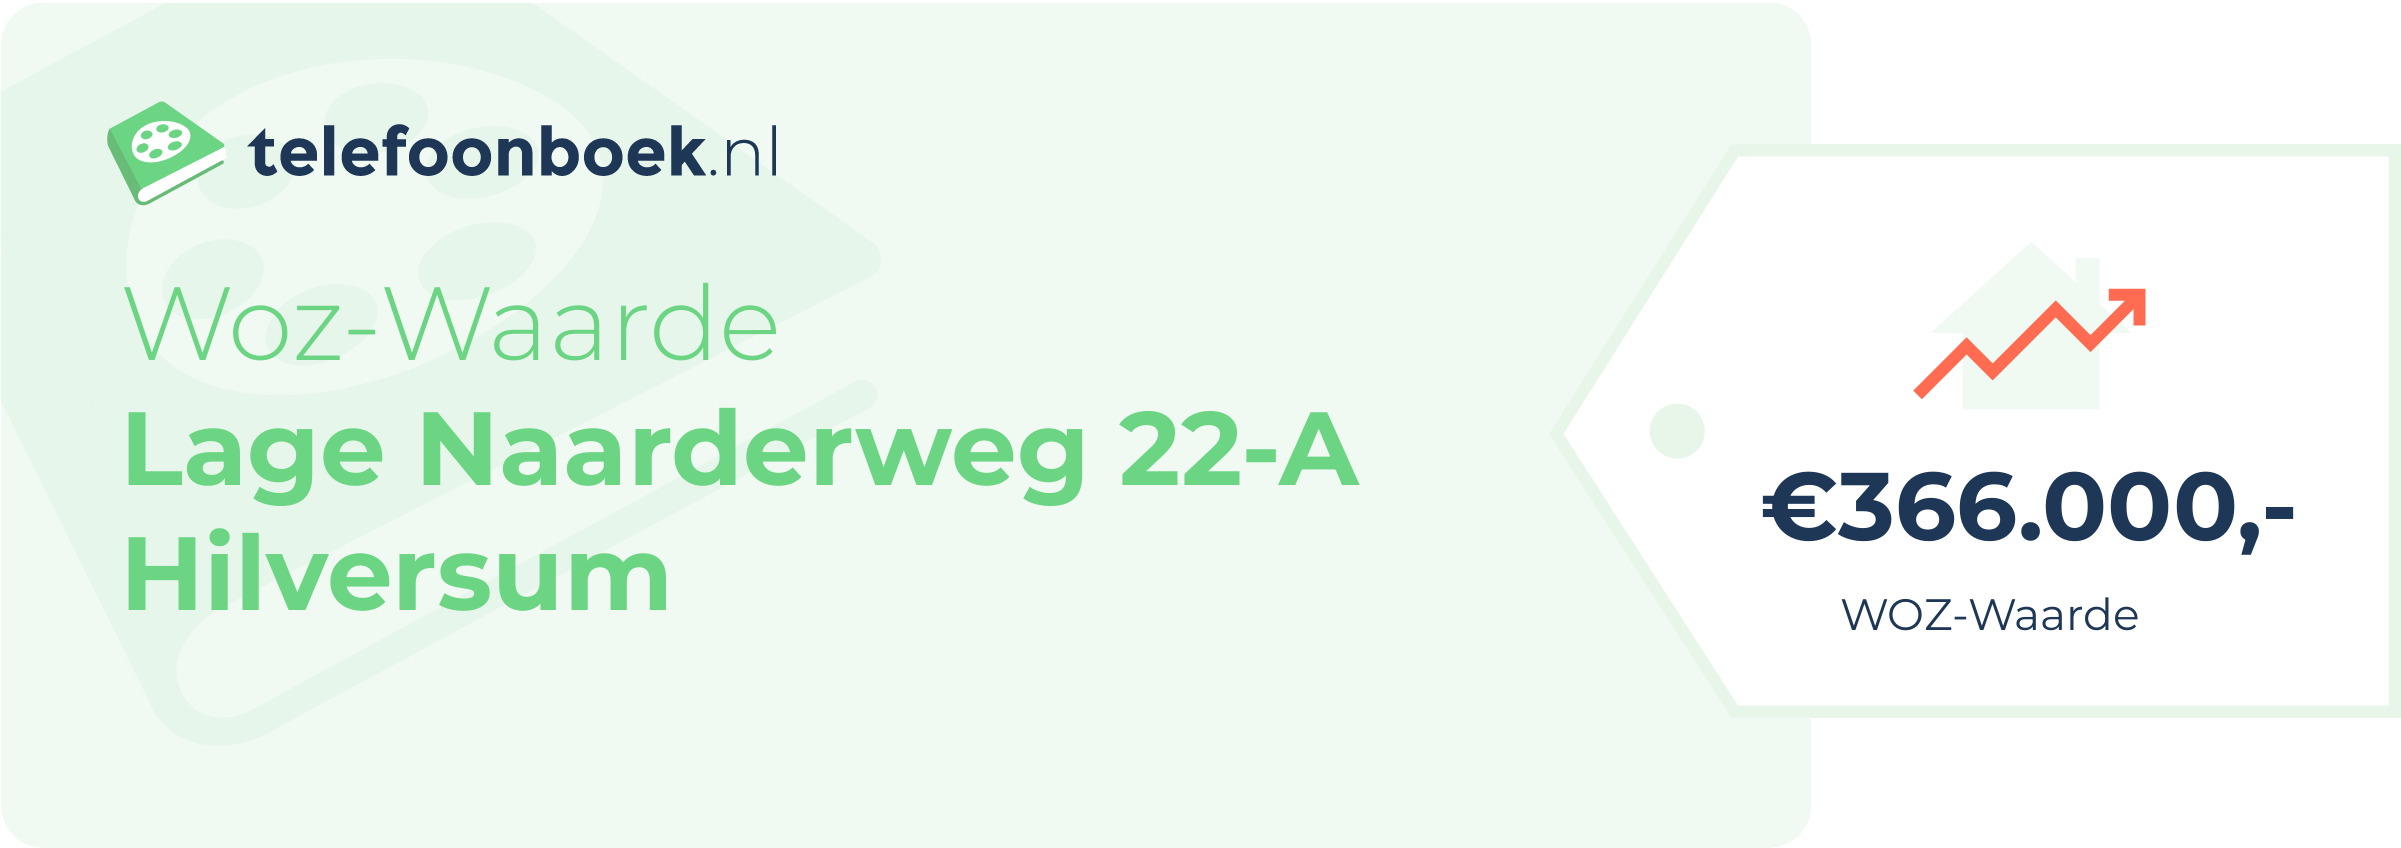 WOZ-waarde Lage Naarderweg 22-A Hilversum